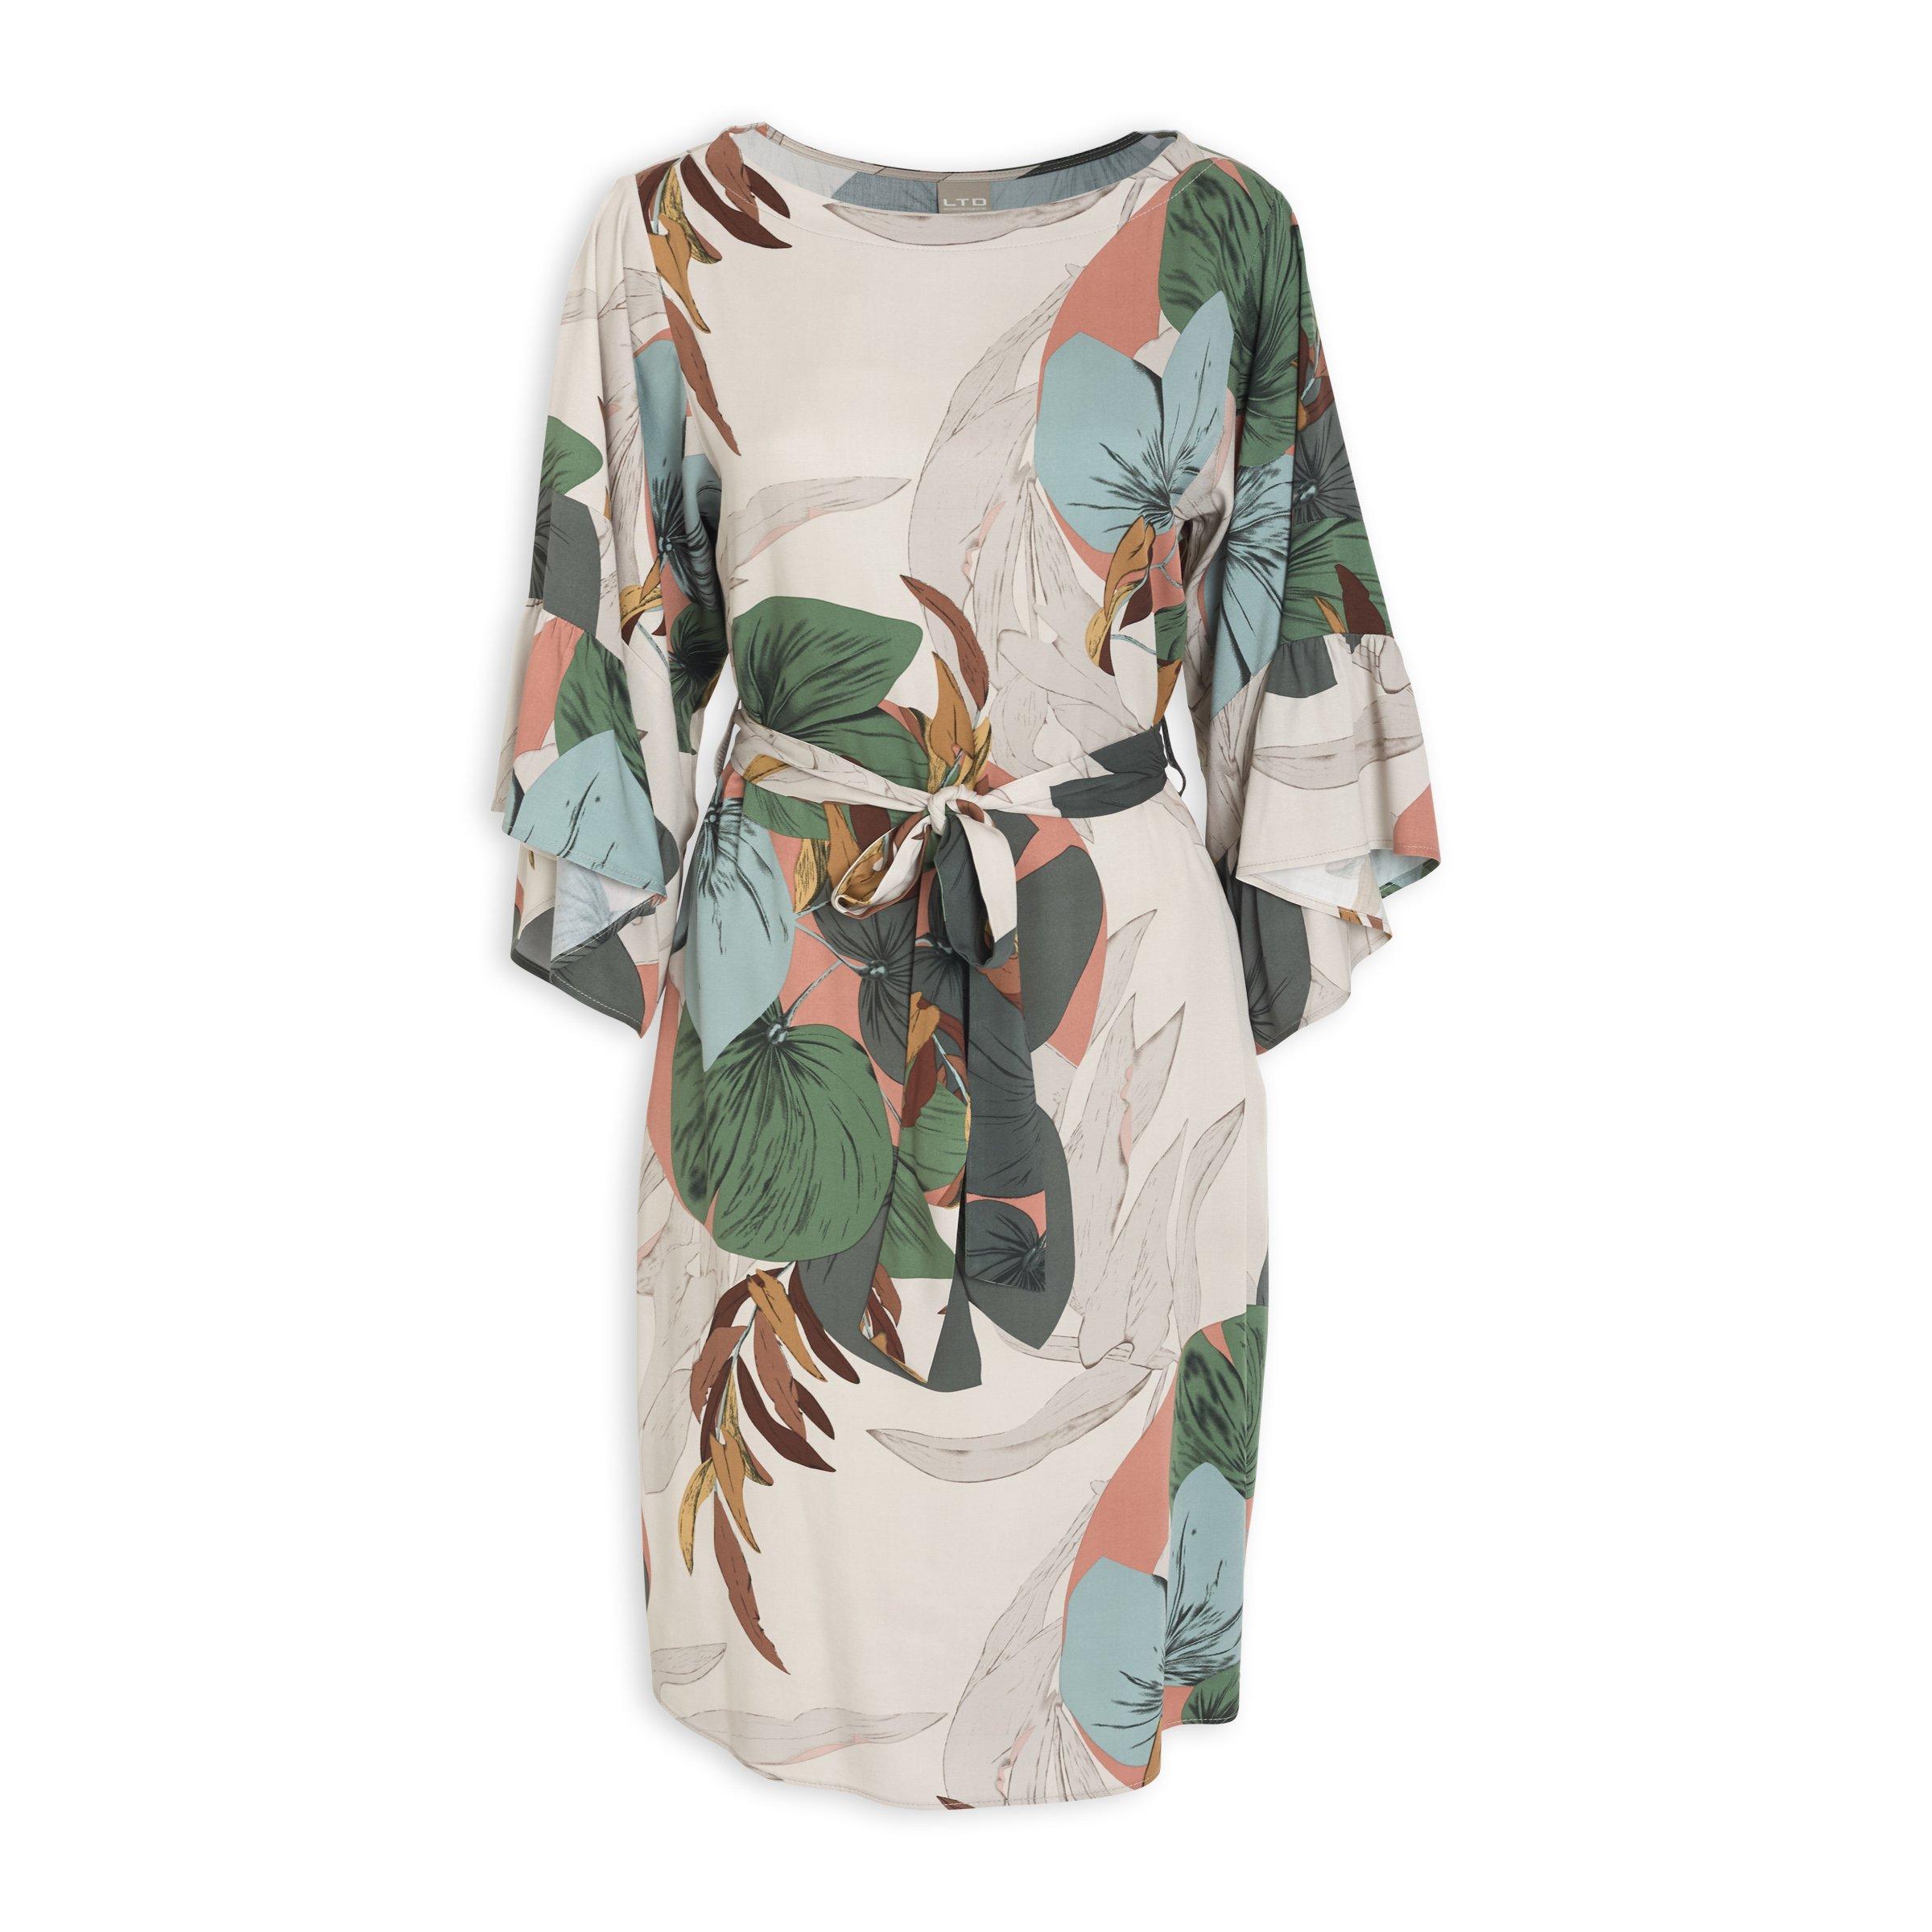 Buy LTD Woman Floral Printed Dress Online | Truworths